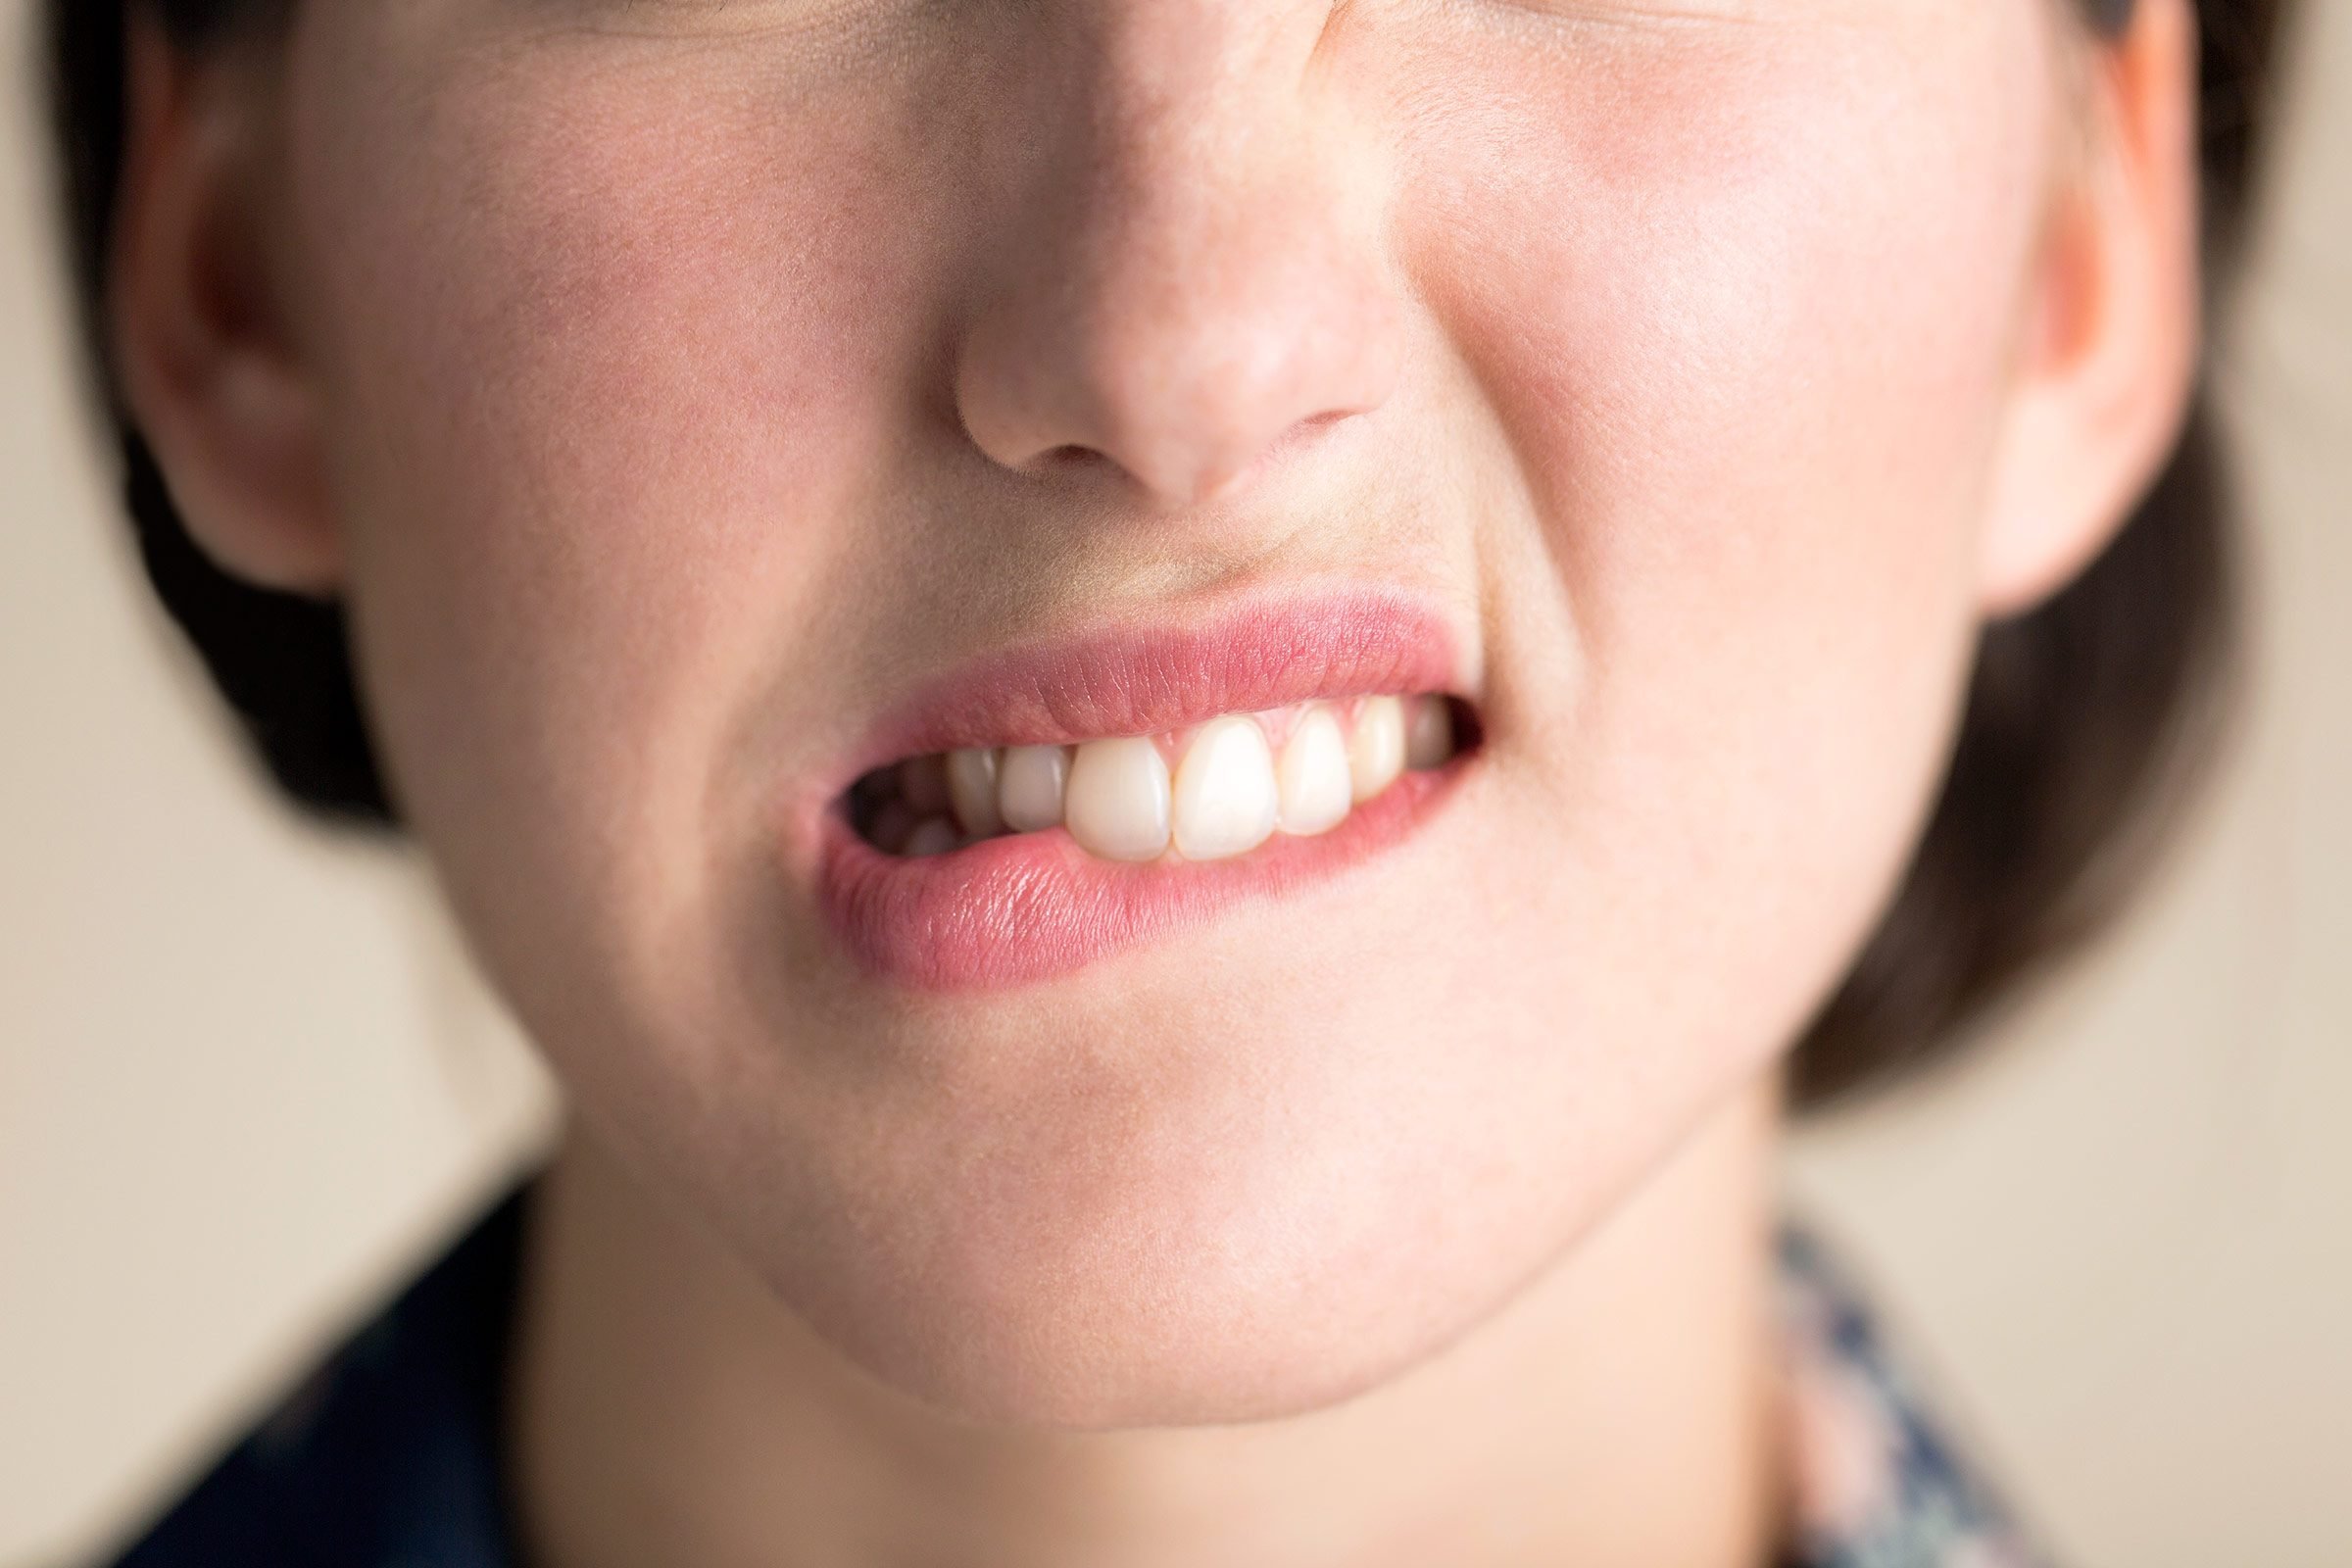 pap smear test woman worried biting lip